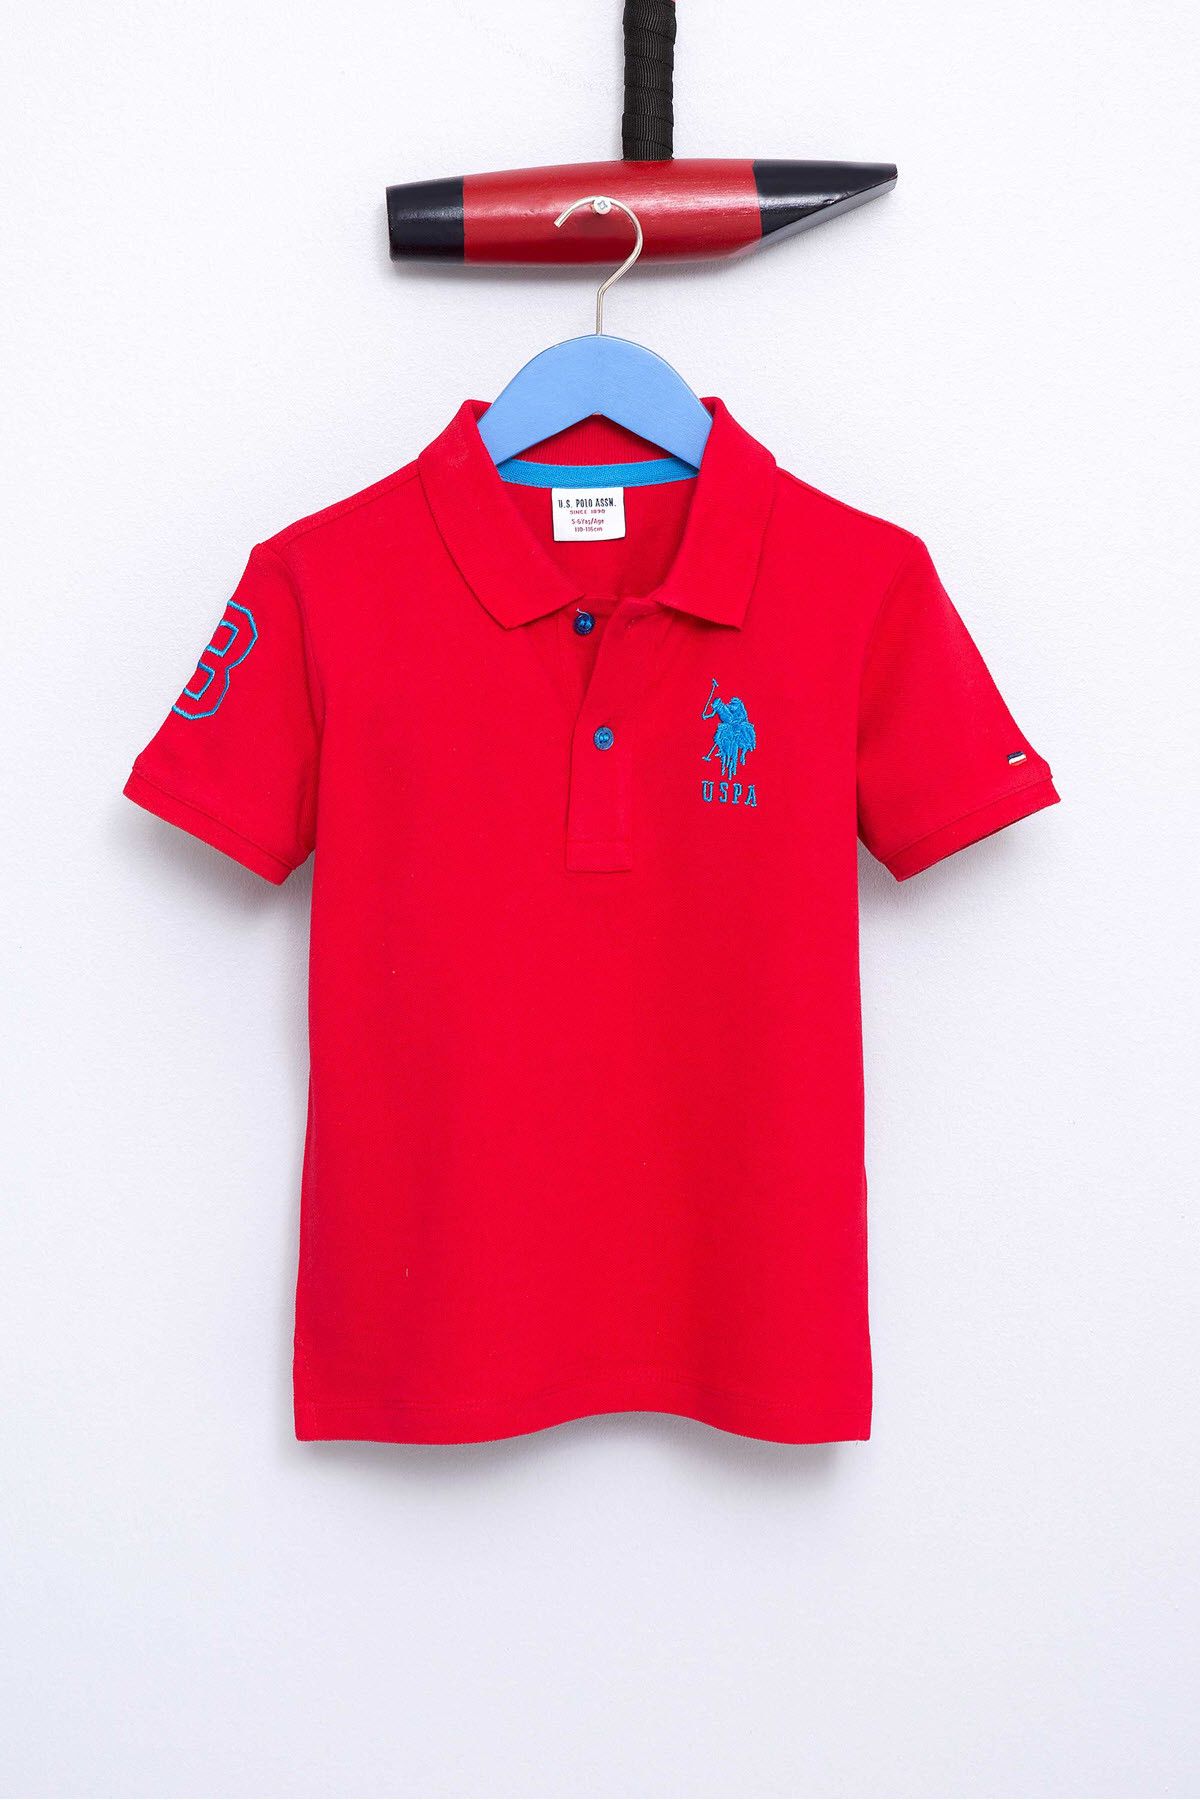 U.S. Polo Assn. Kırmızı Erkek Cocuk T-Shirt